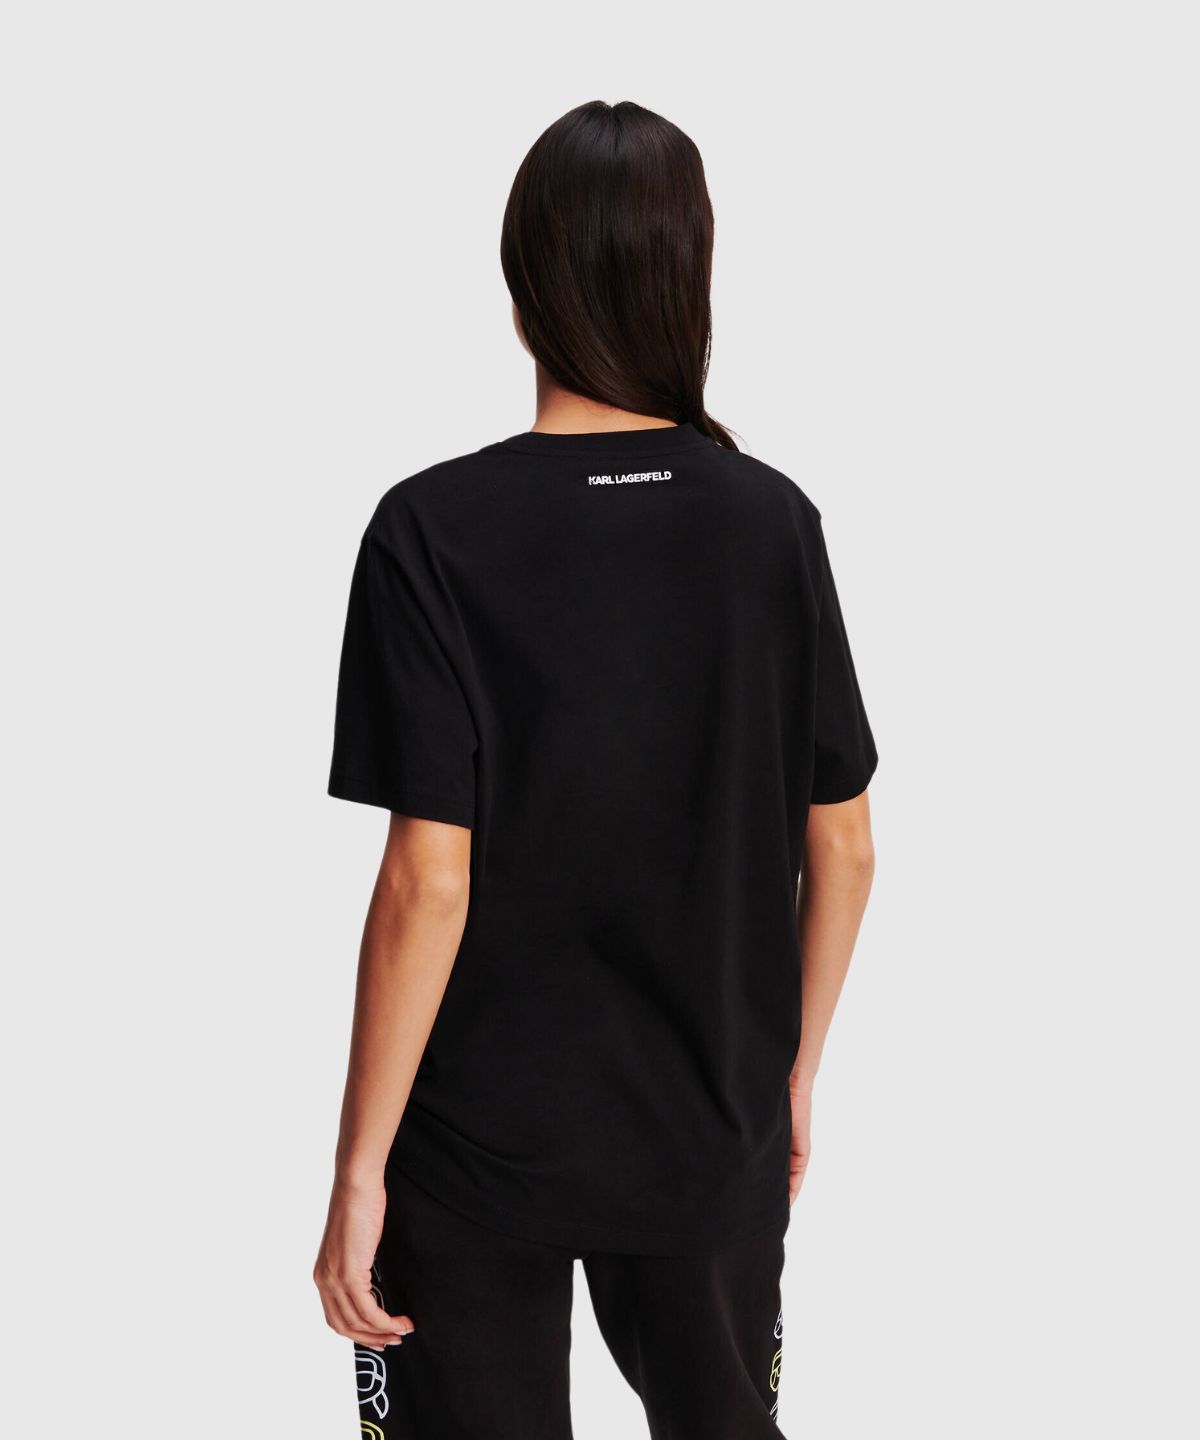 Ikonik 2.0 Outline T-Shirt